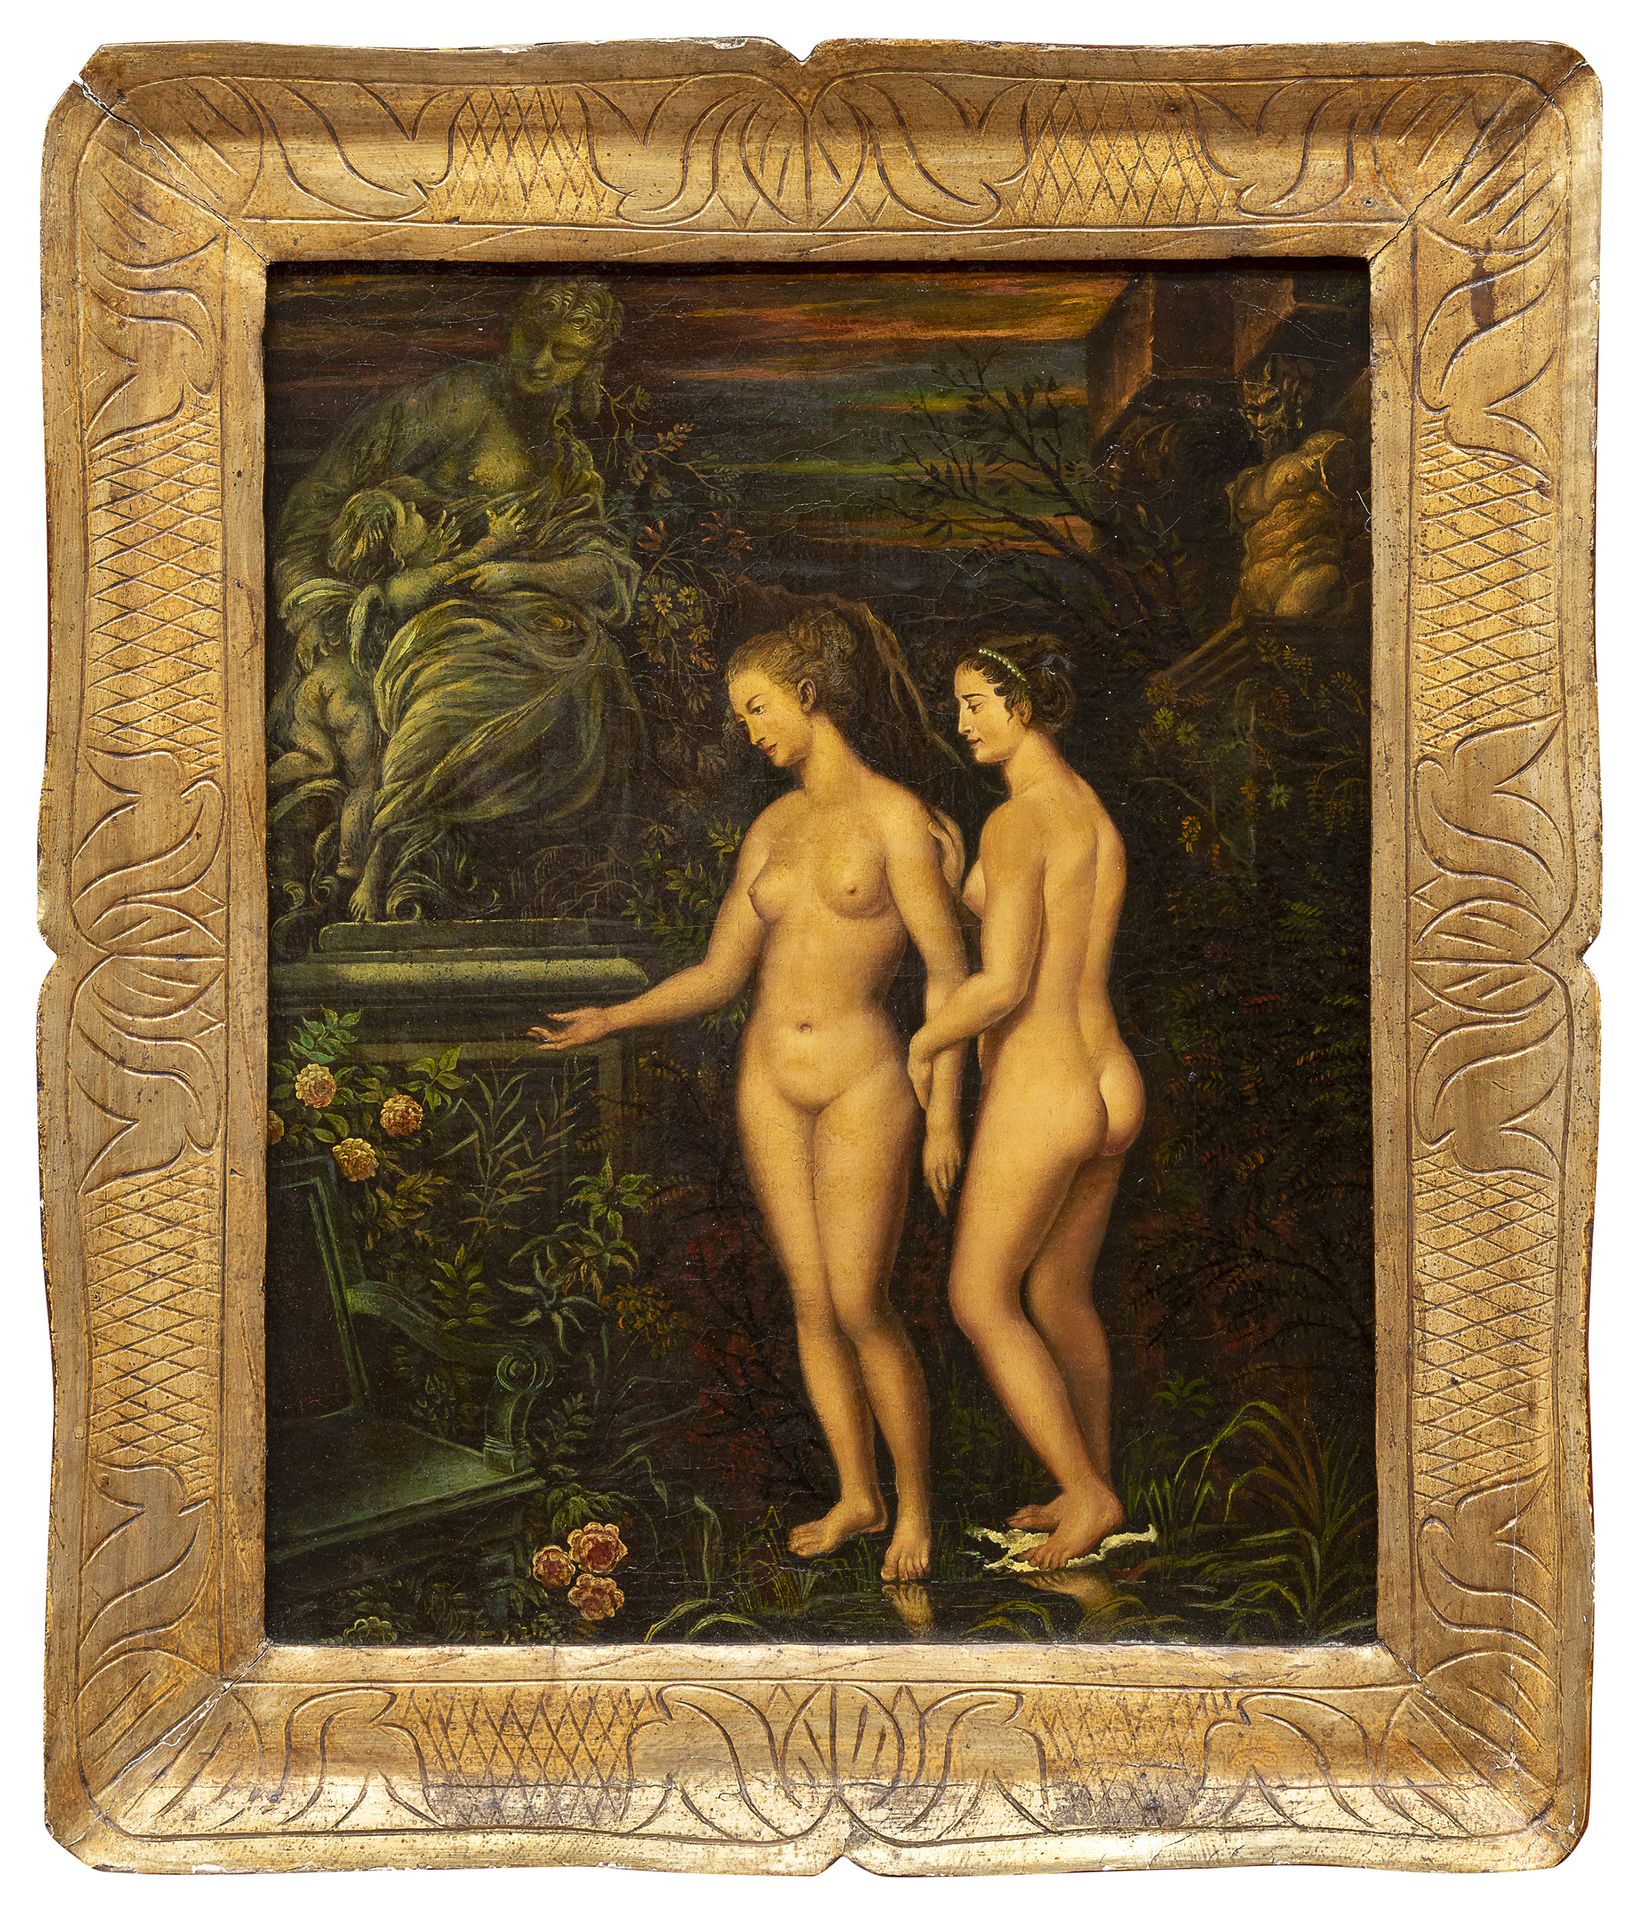 Null 意大利画家，19世纪



金星之浴

布面油画，cm. 40 x 33

无符号

镀金框架